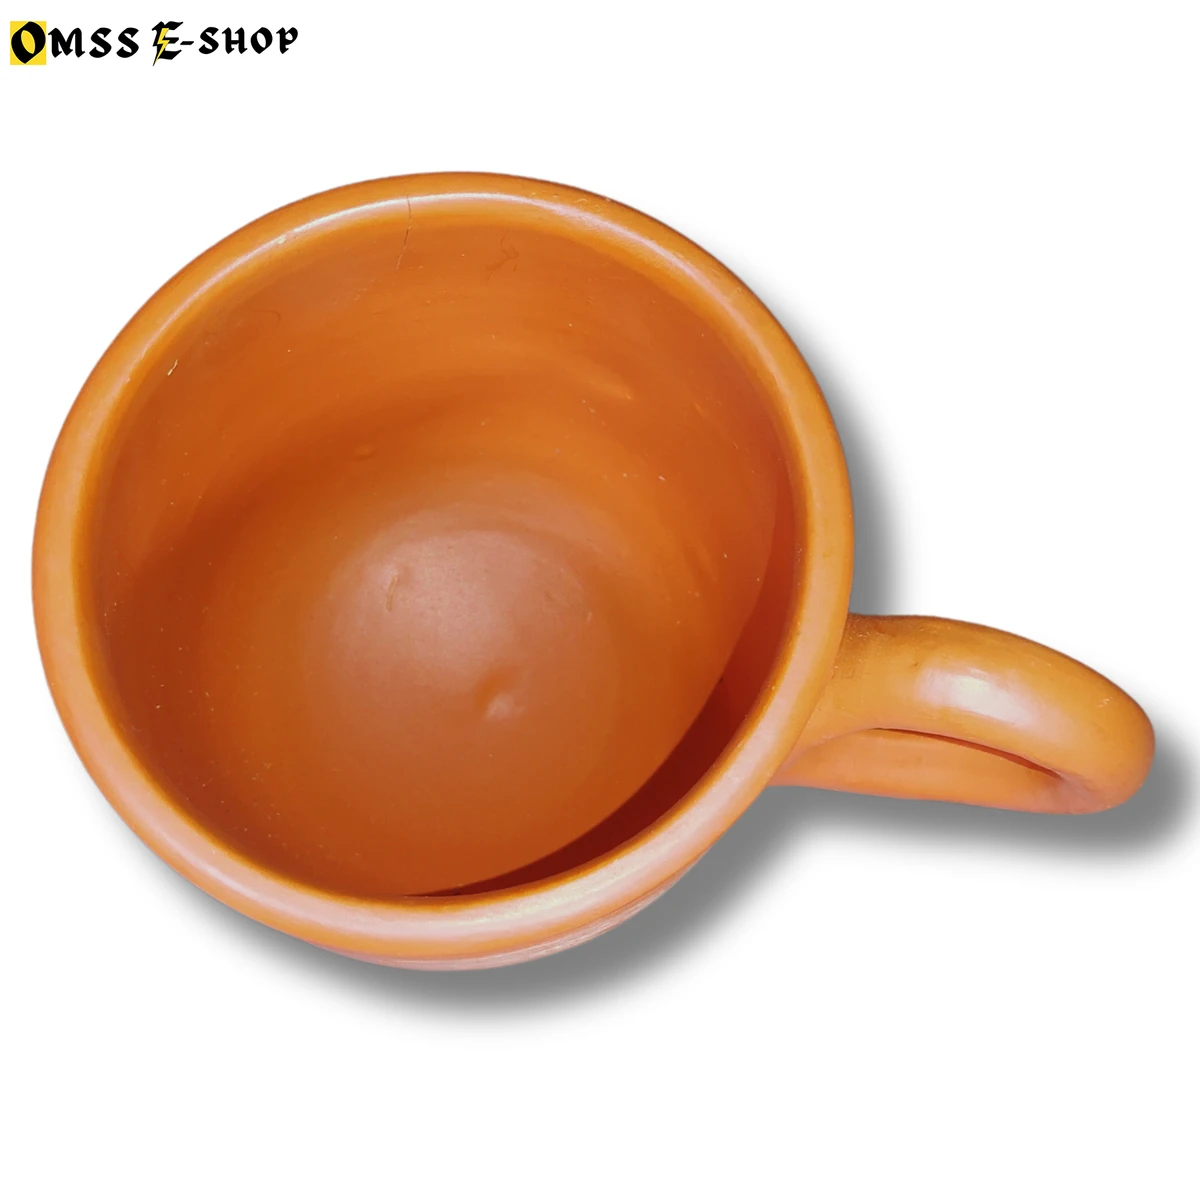 Beautiful And Durable Terracotta Clay Tea Mugs